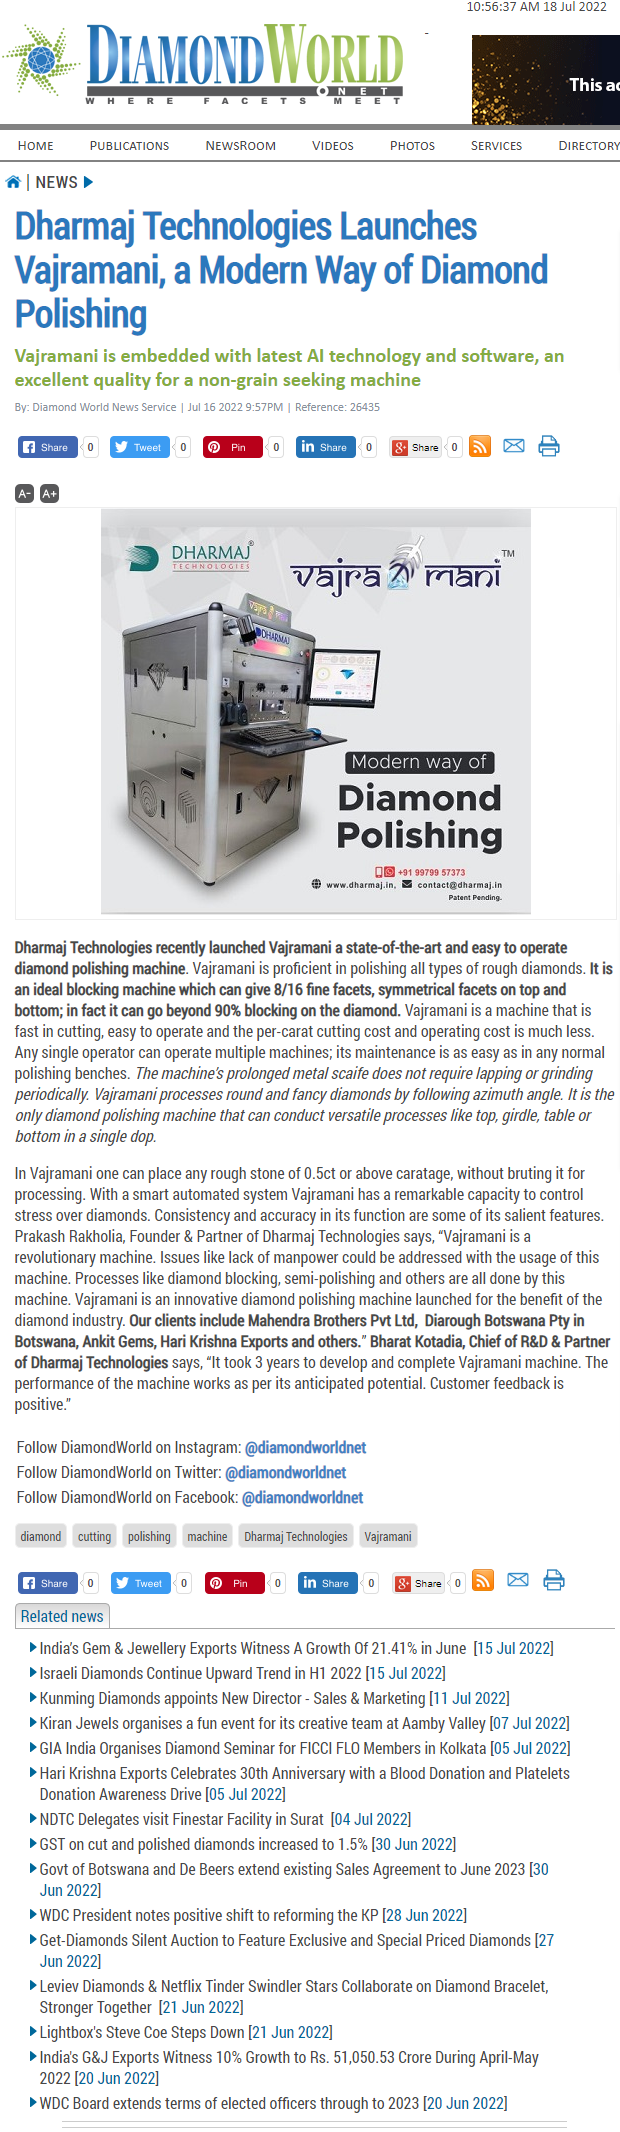 Dharmaj Technologies Launches Vajramani, a Modern Way of Diamond Polishing